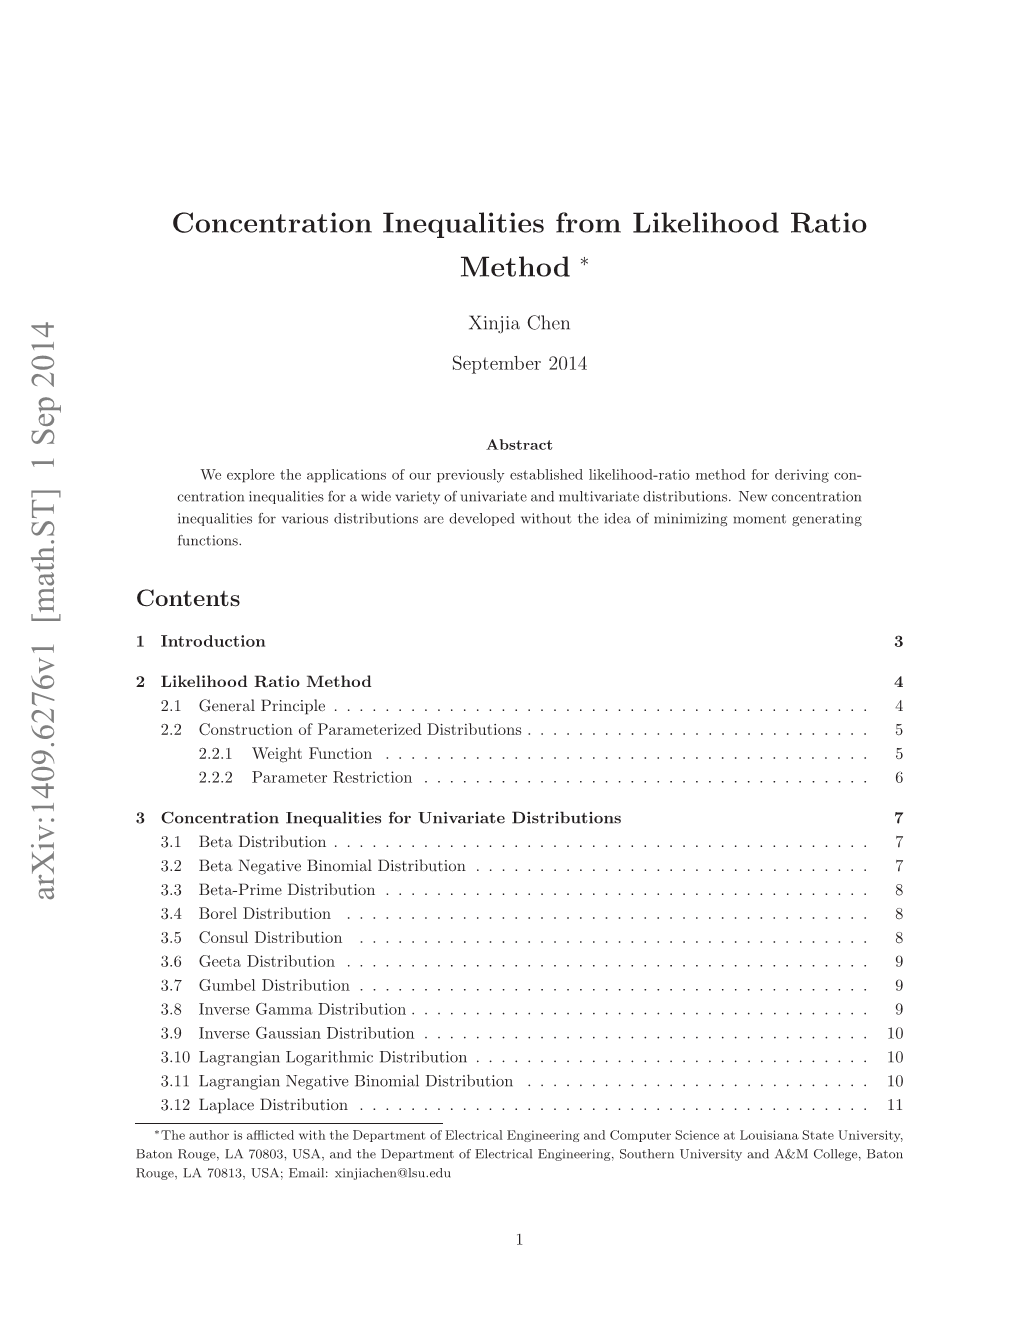 Concentration Inequalities from Likelihood Ratio Method